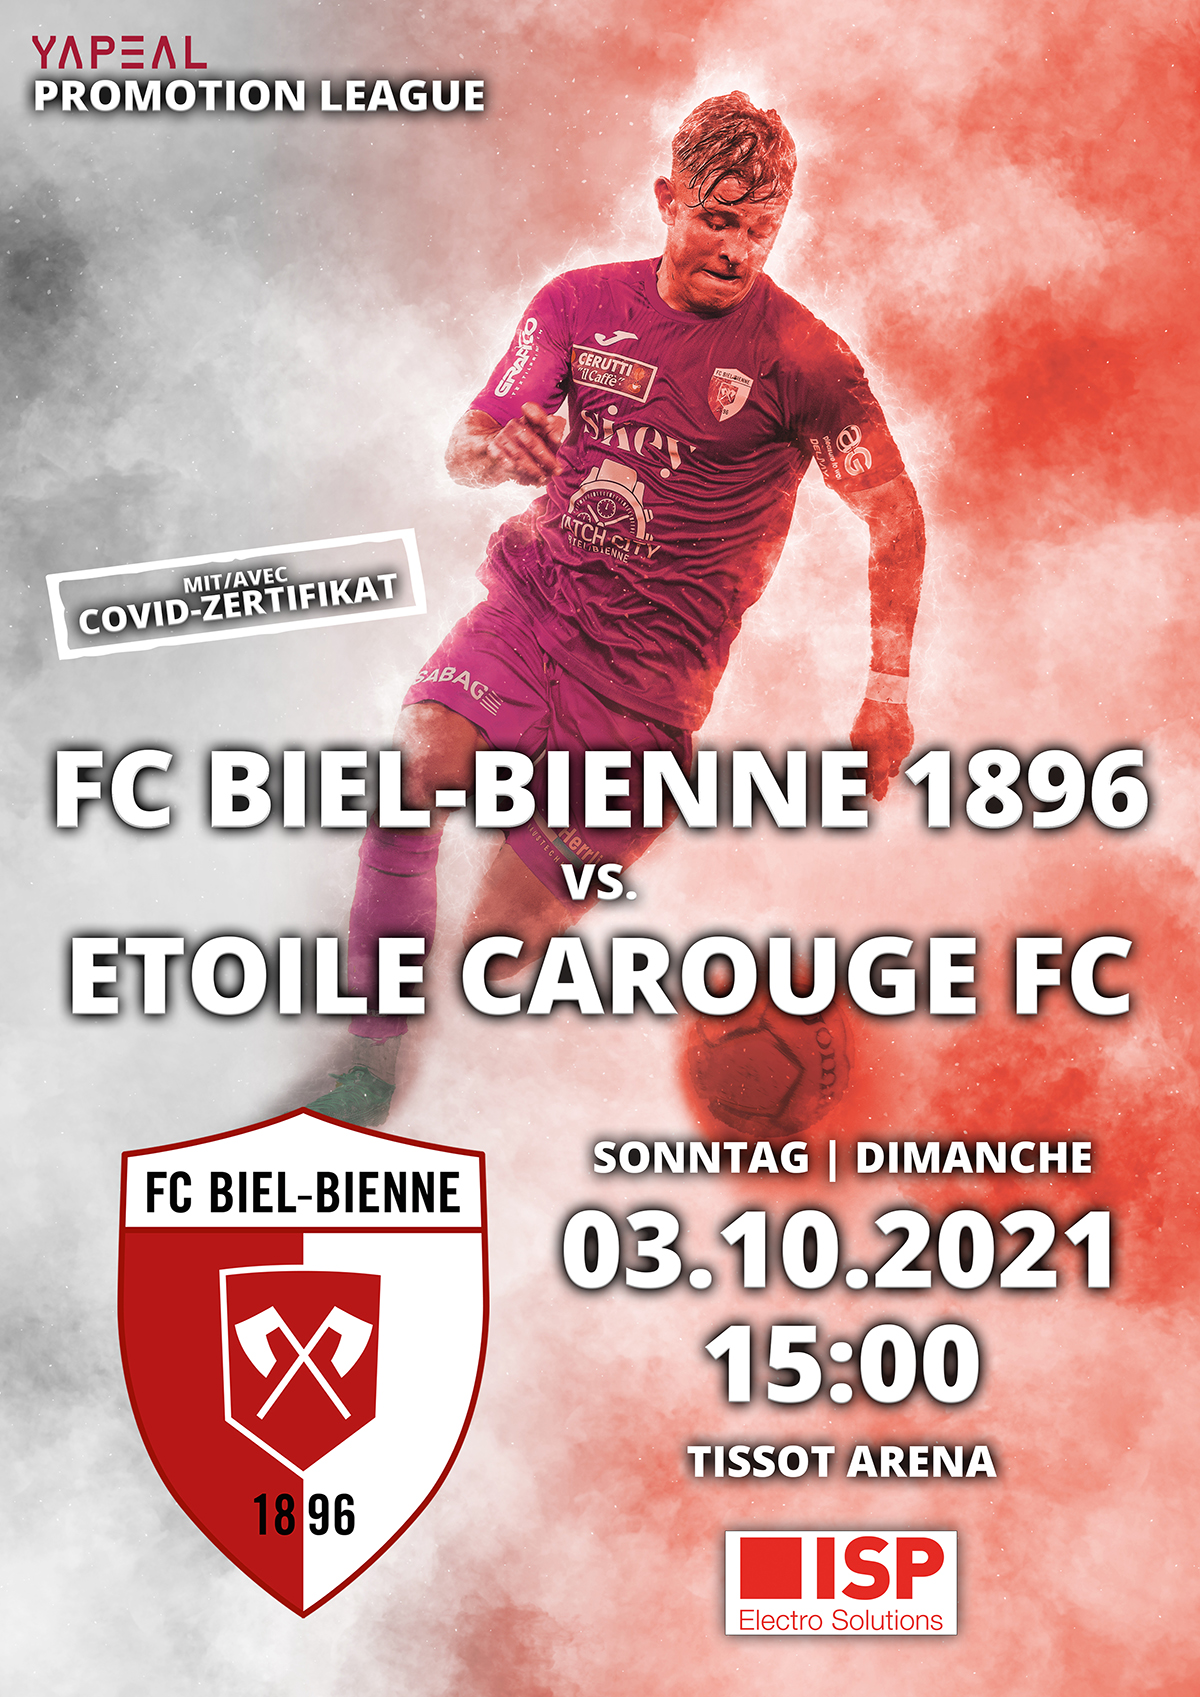 FC Biel-Bienne 1896 vs. Etoile Carouge FC